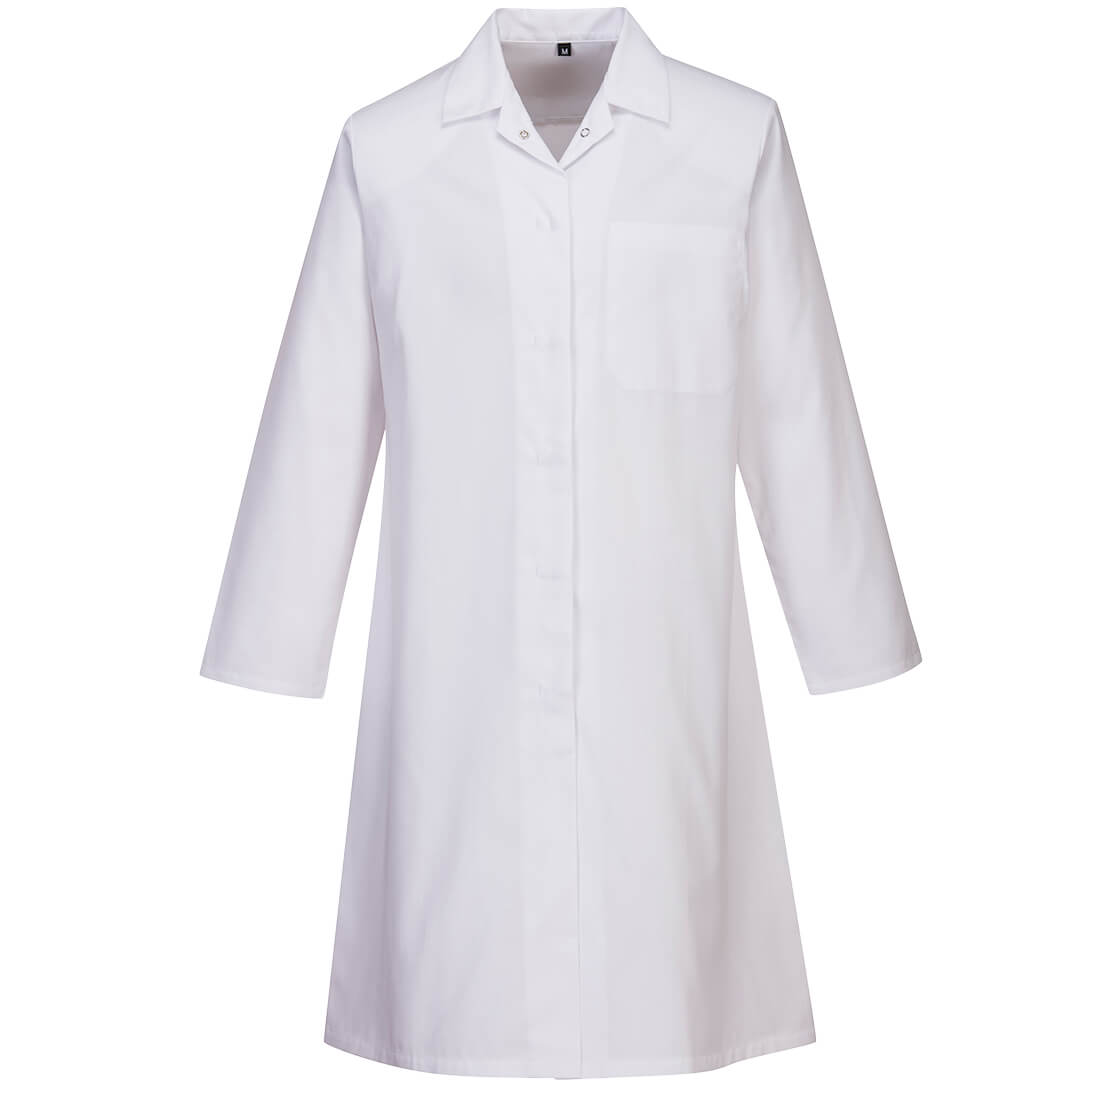 Portwest 2205 - White Ladies Food Industry Coat, One Pocket sz XXL Regular Apron jacket